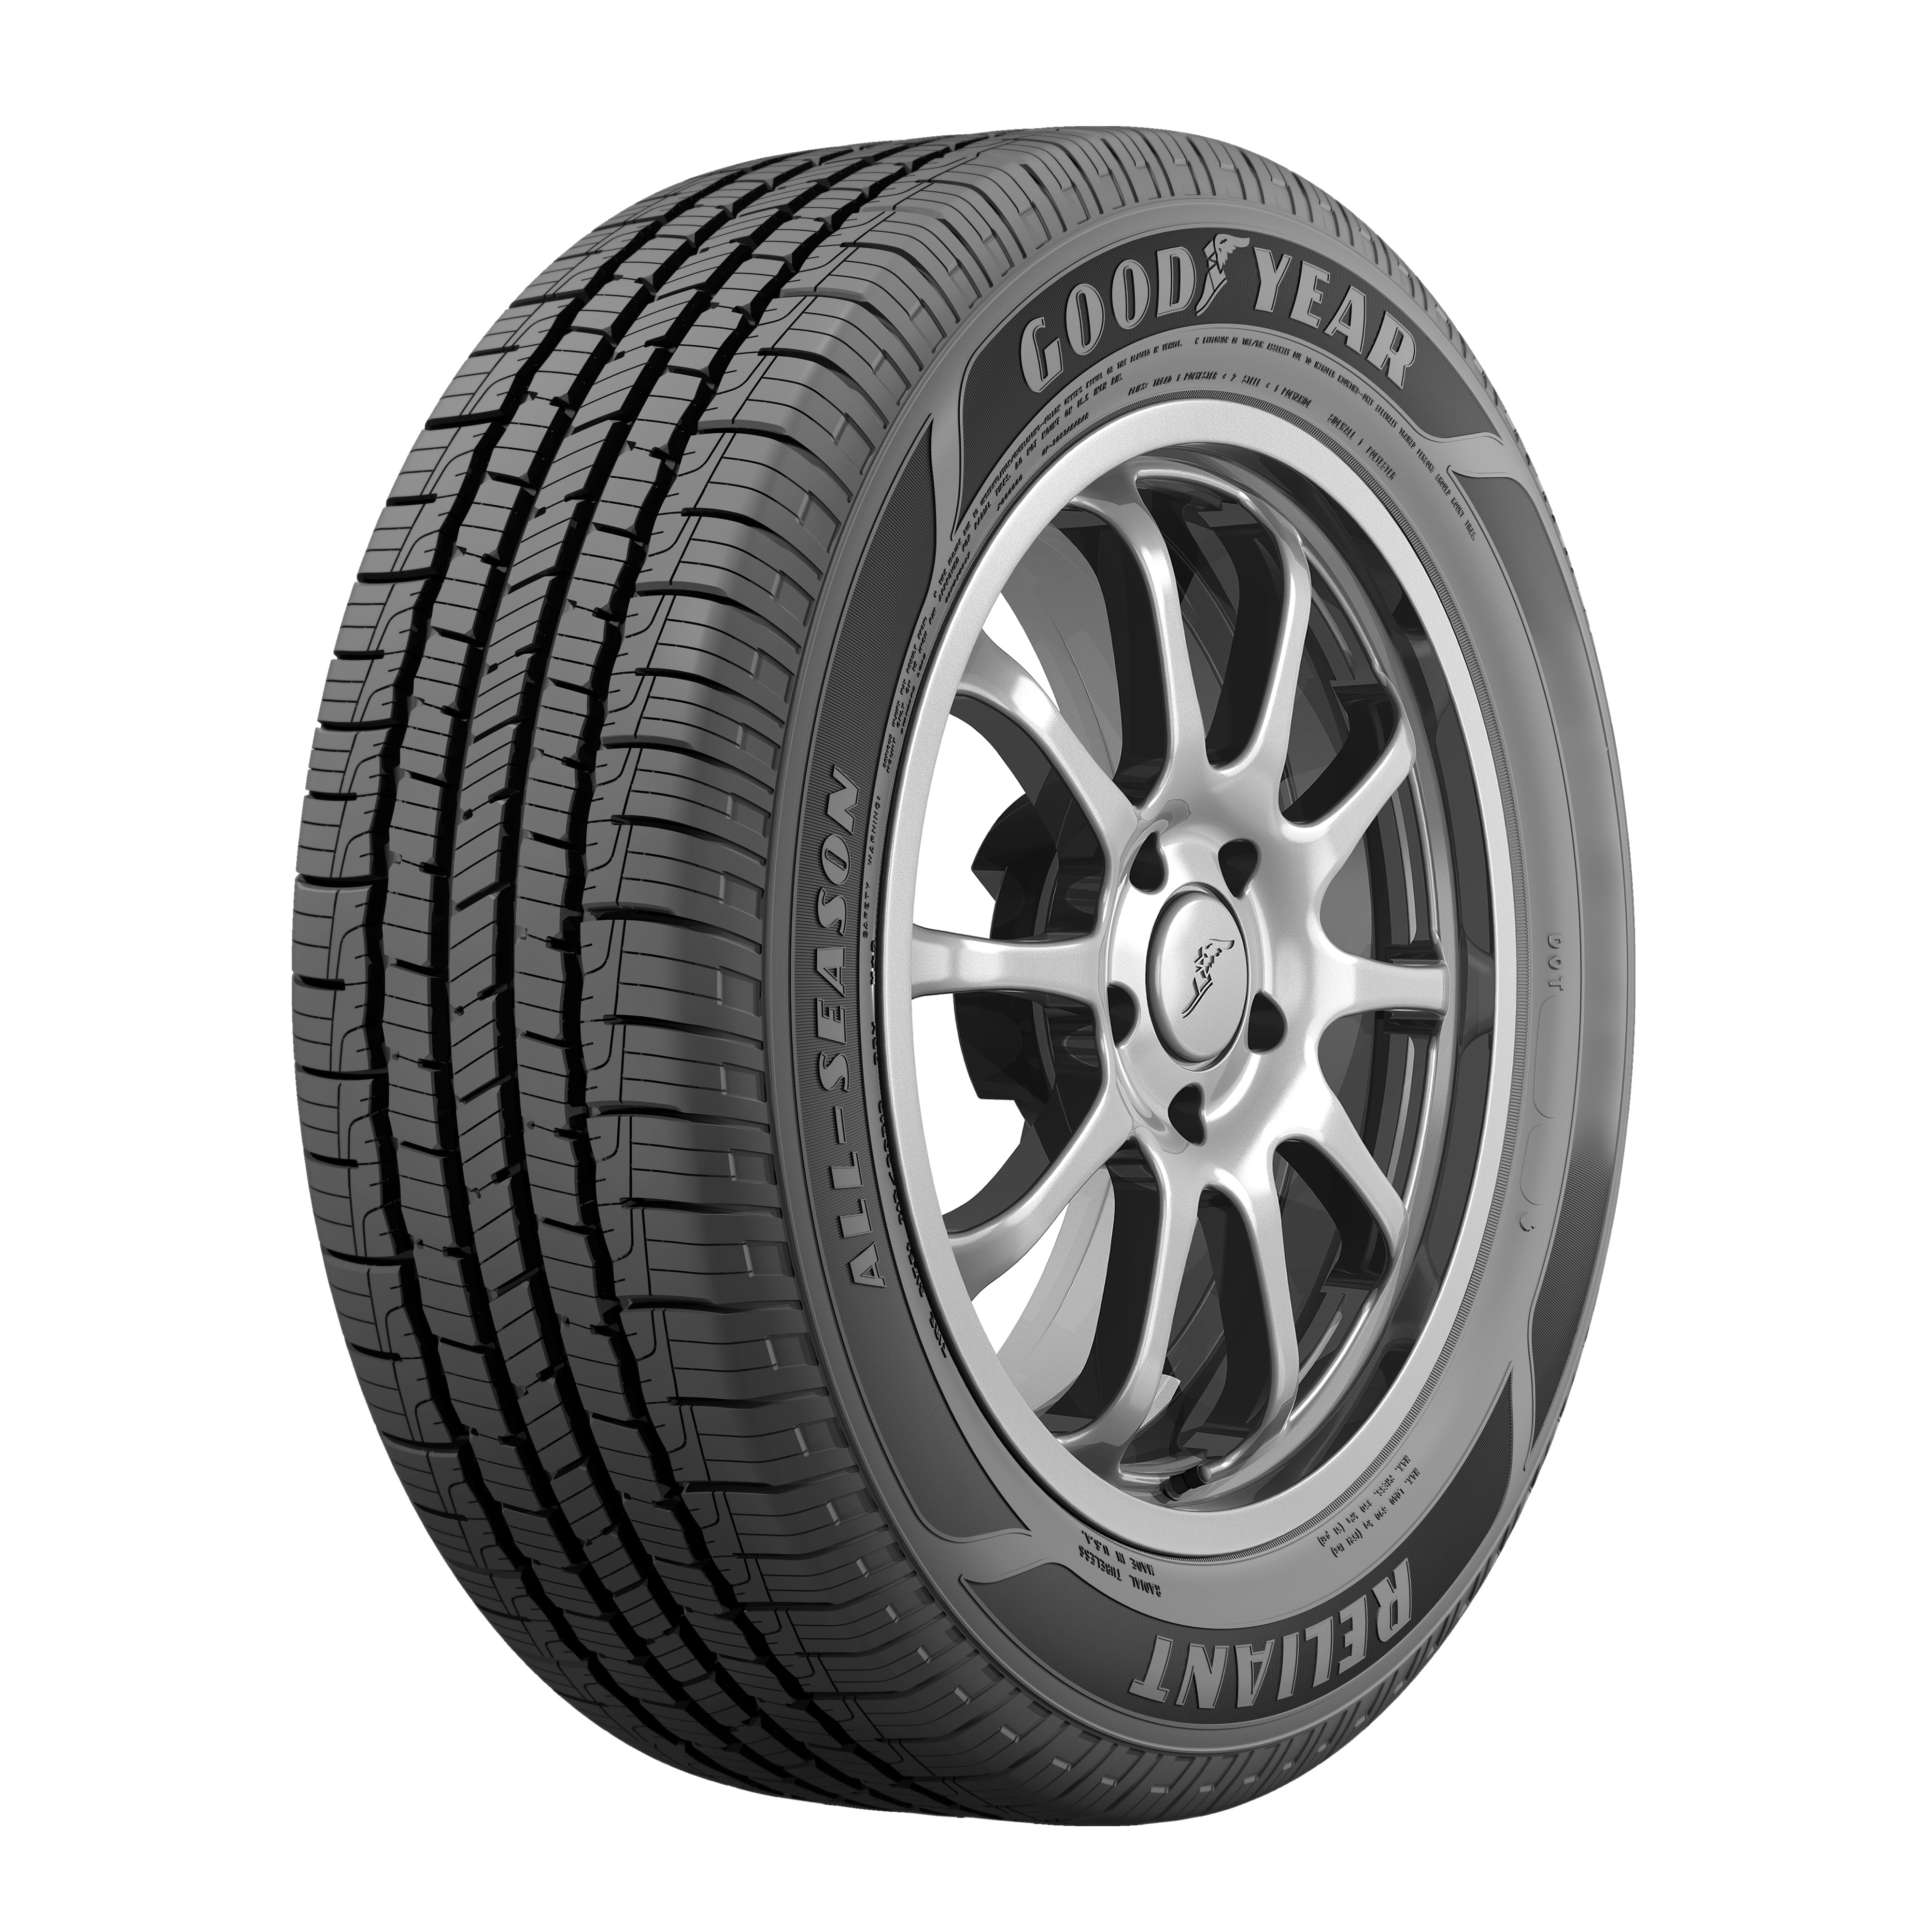 Goodyear Reliant All-Season 195/65R15 91H All-Season Tire